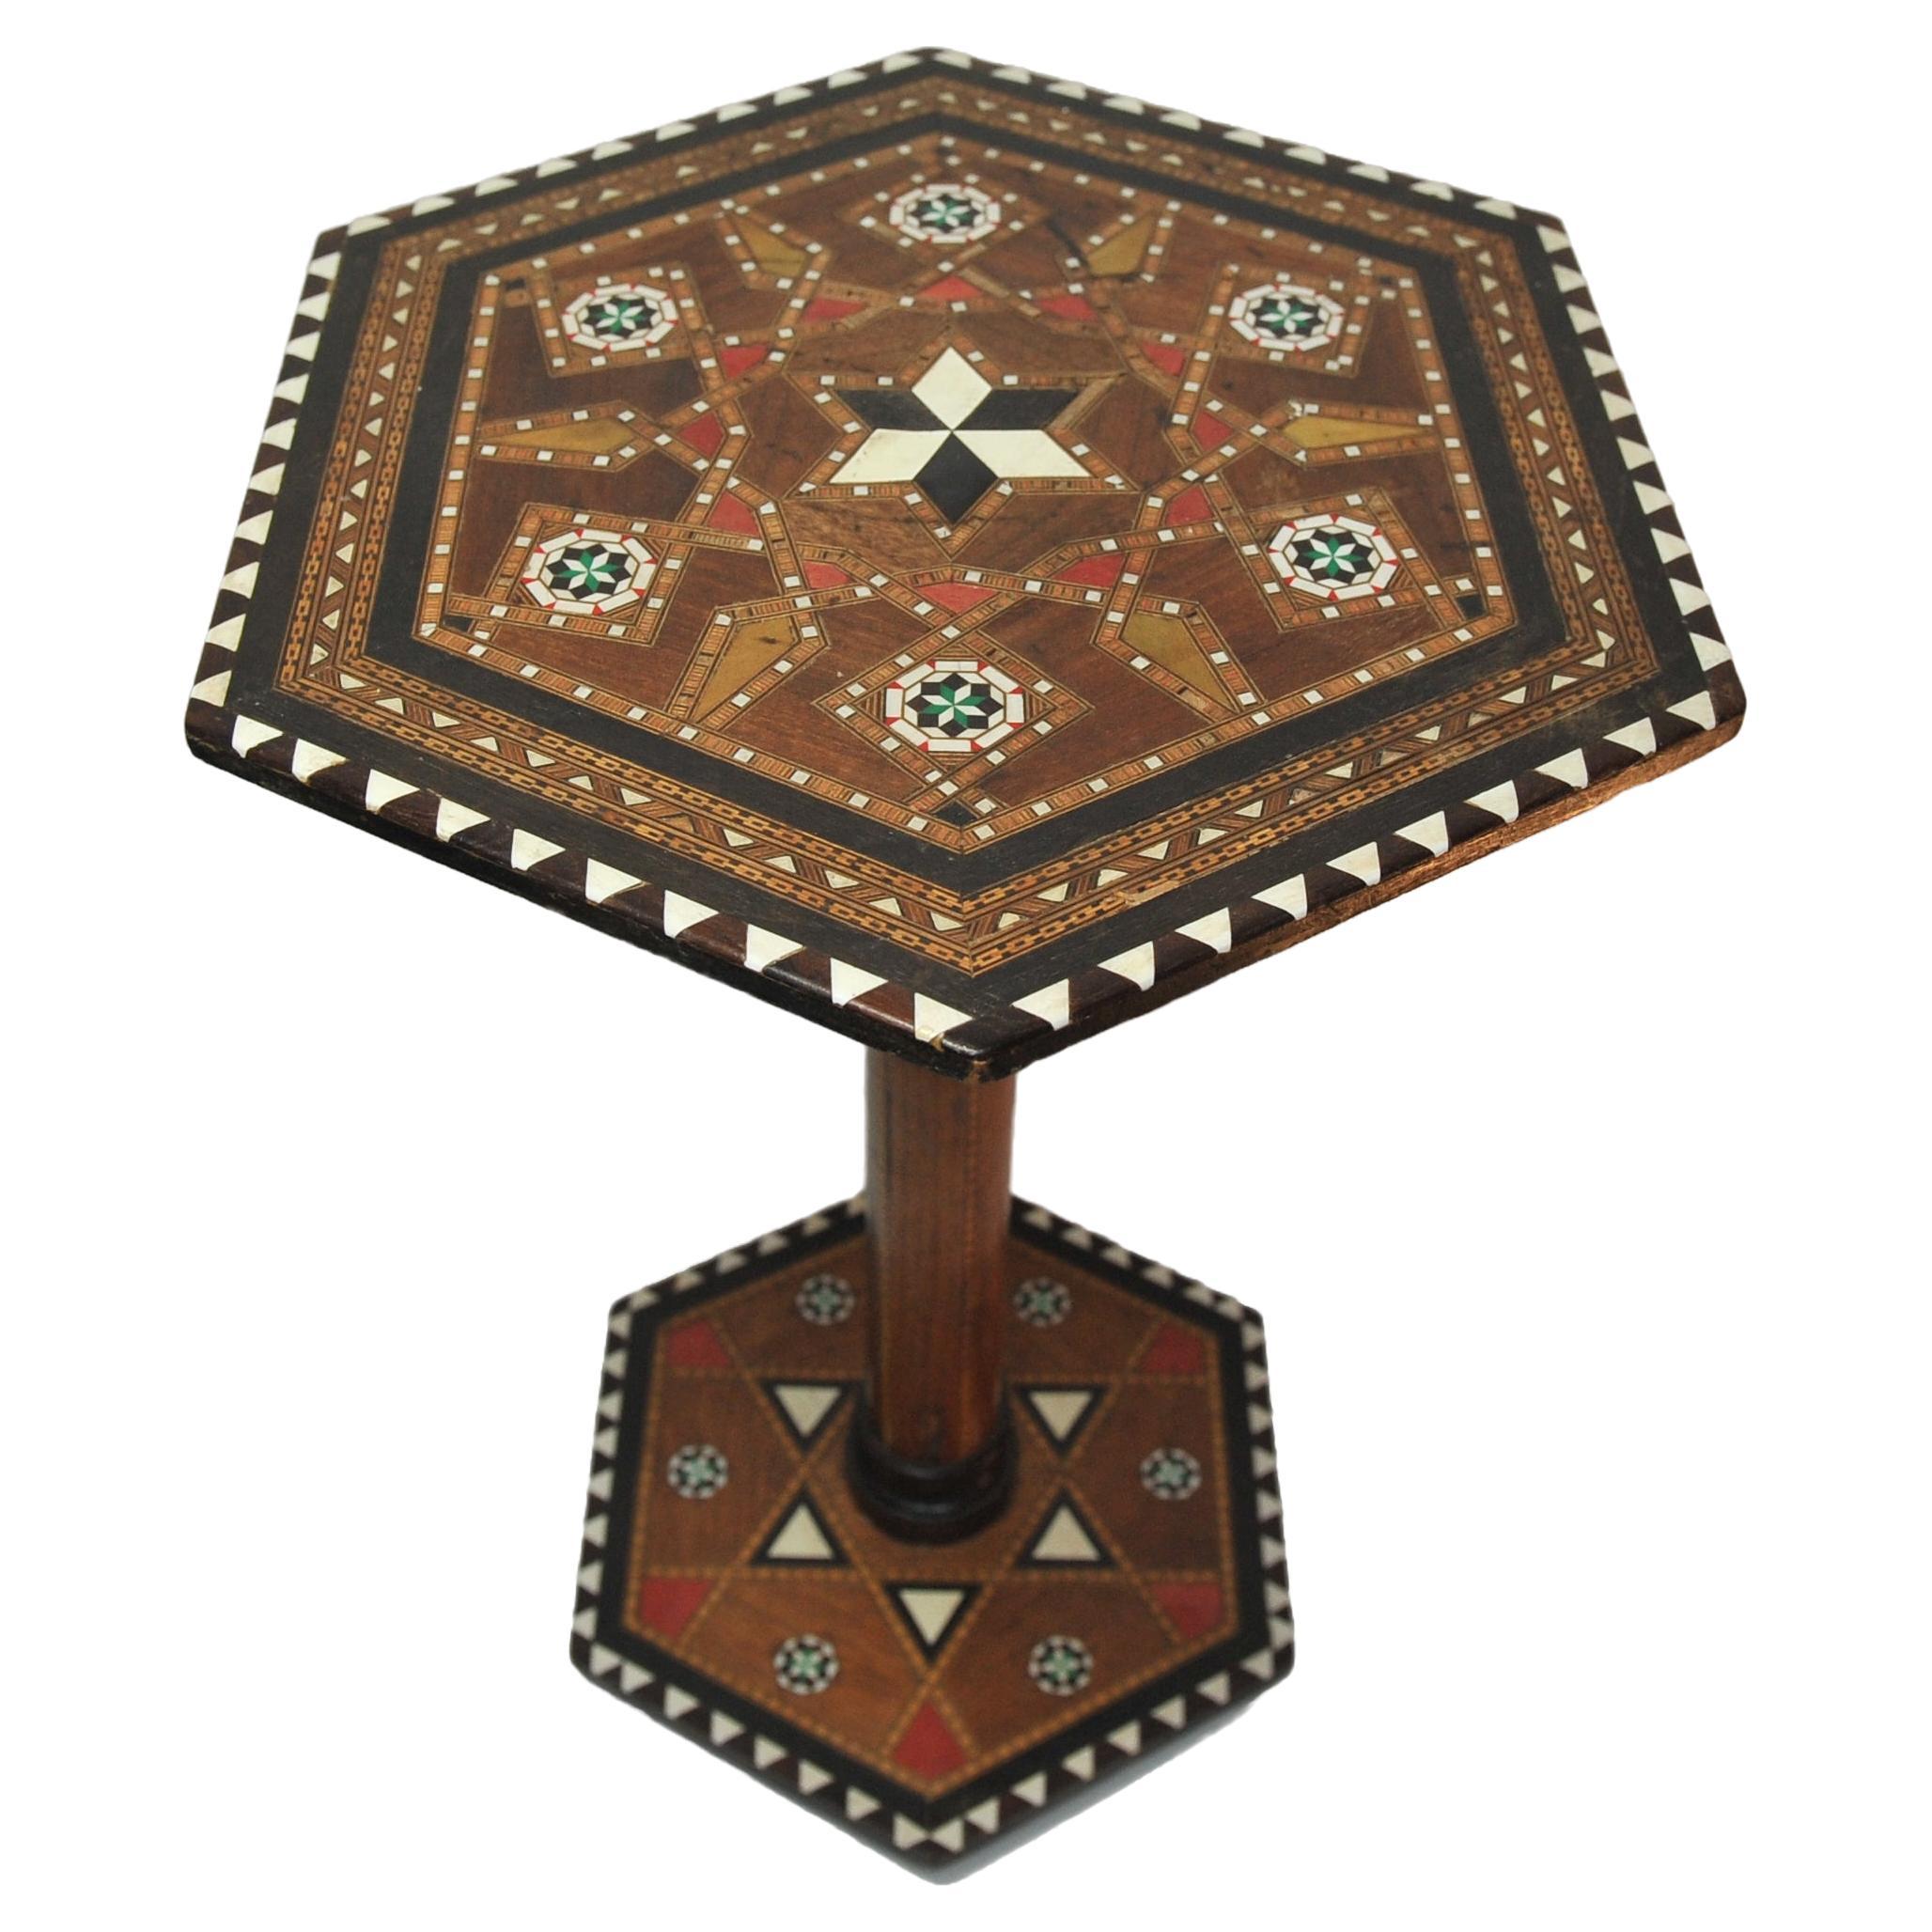 A 19th Century Hexagonal Moorish Fruitwood Tea Table With Mosaic Detailing 